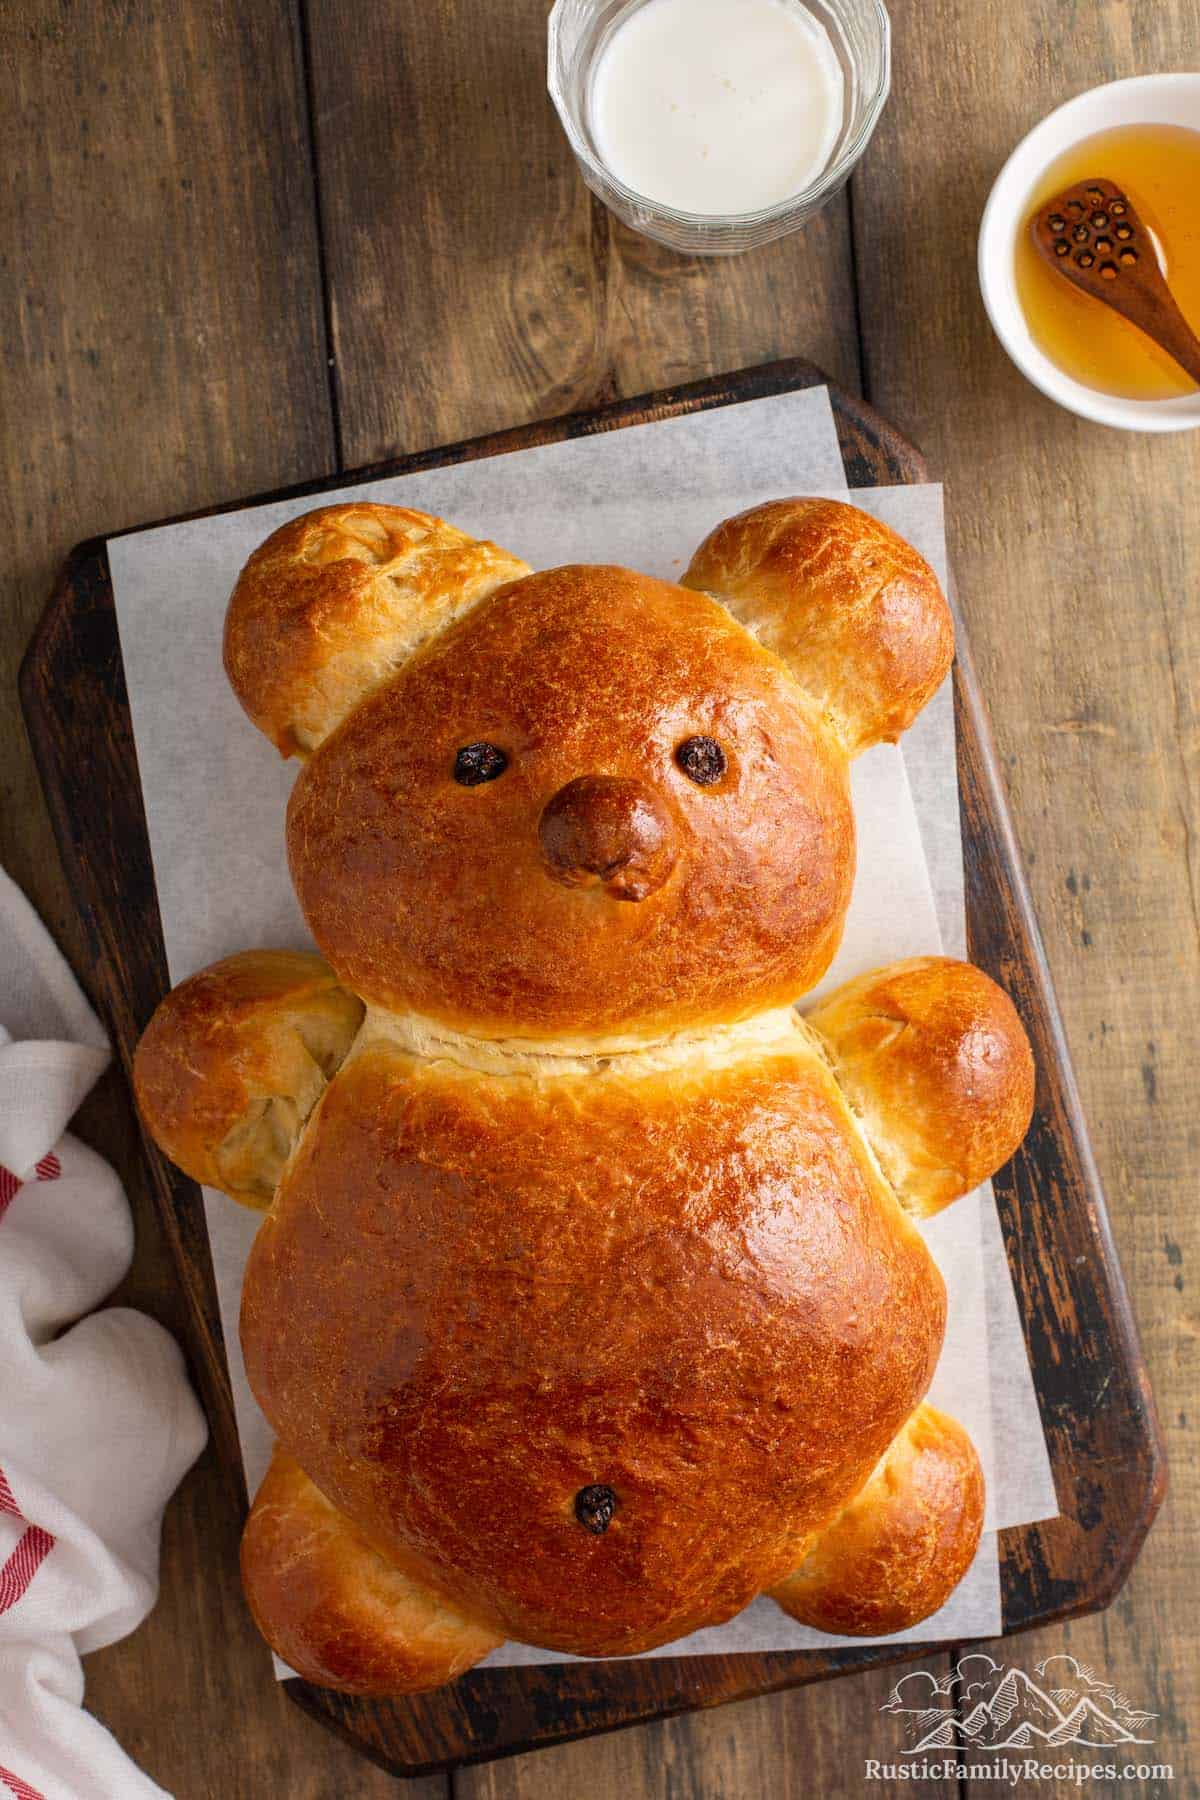 Challah bread shaped like a teddy bear